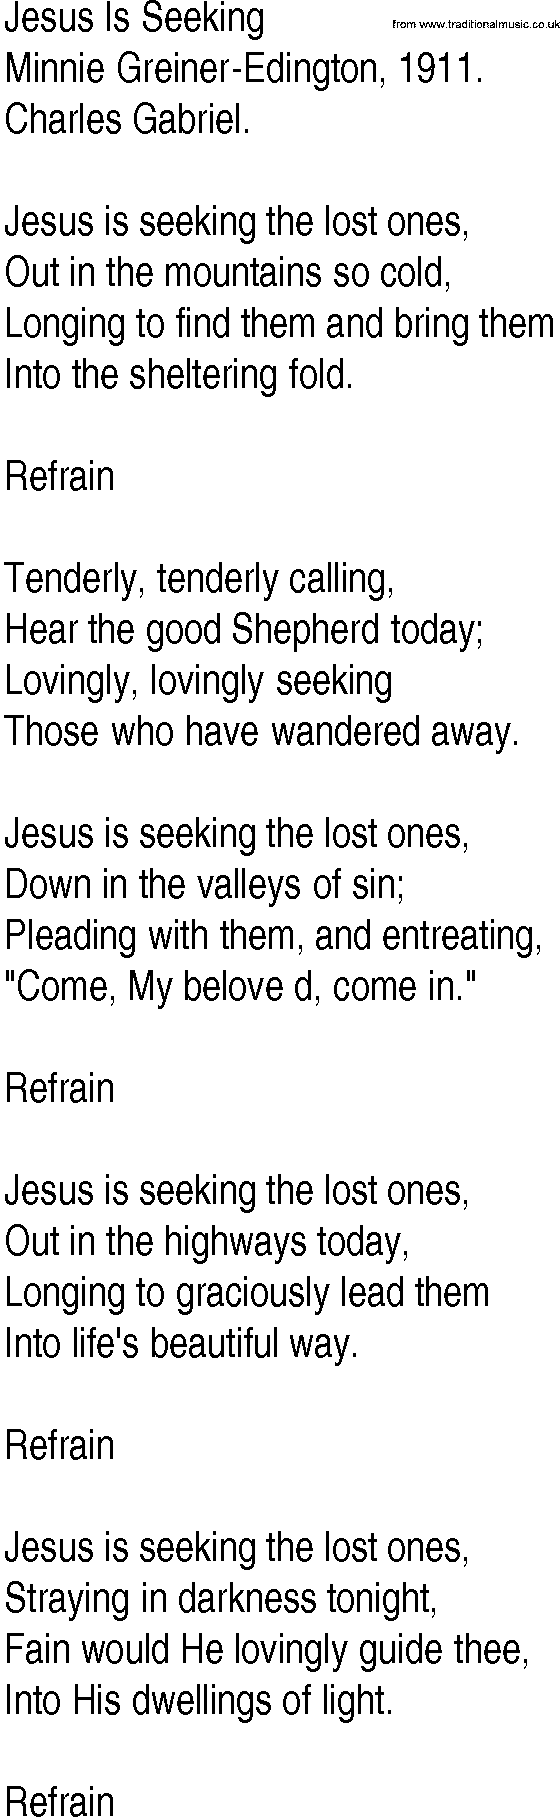 Hymn and Gospel Song: Jesus Is Seeking by Minnie GreinerEdington lyrics